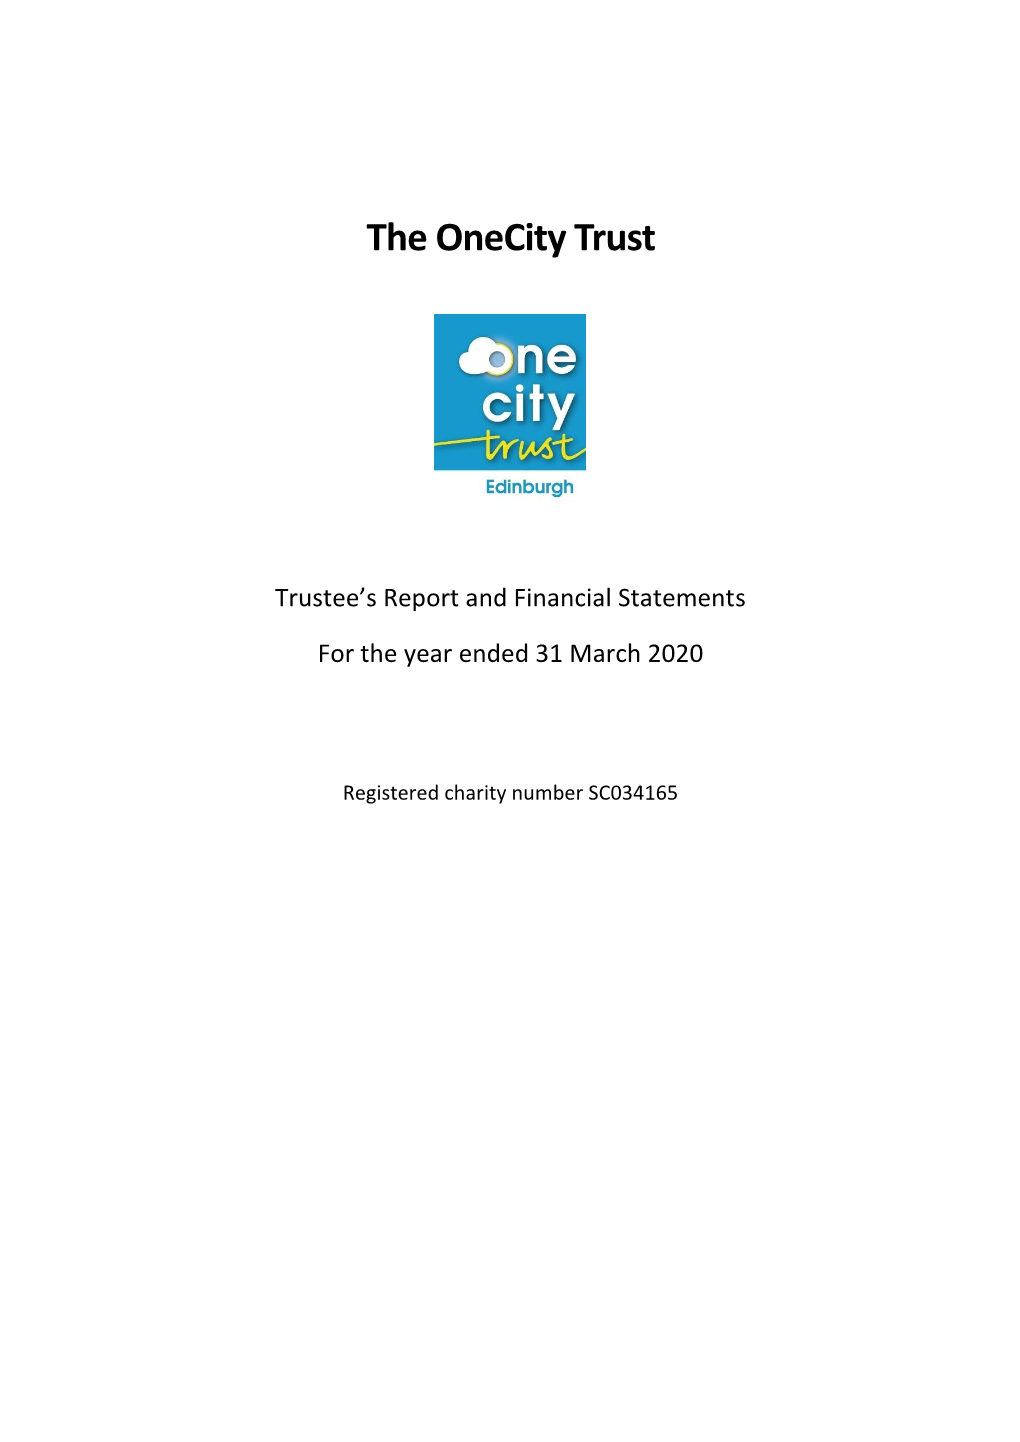 The Onecity Trust